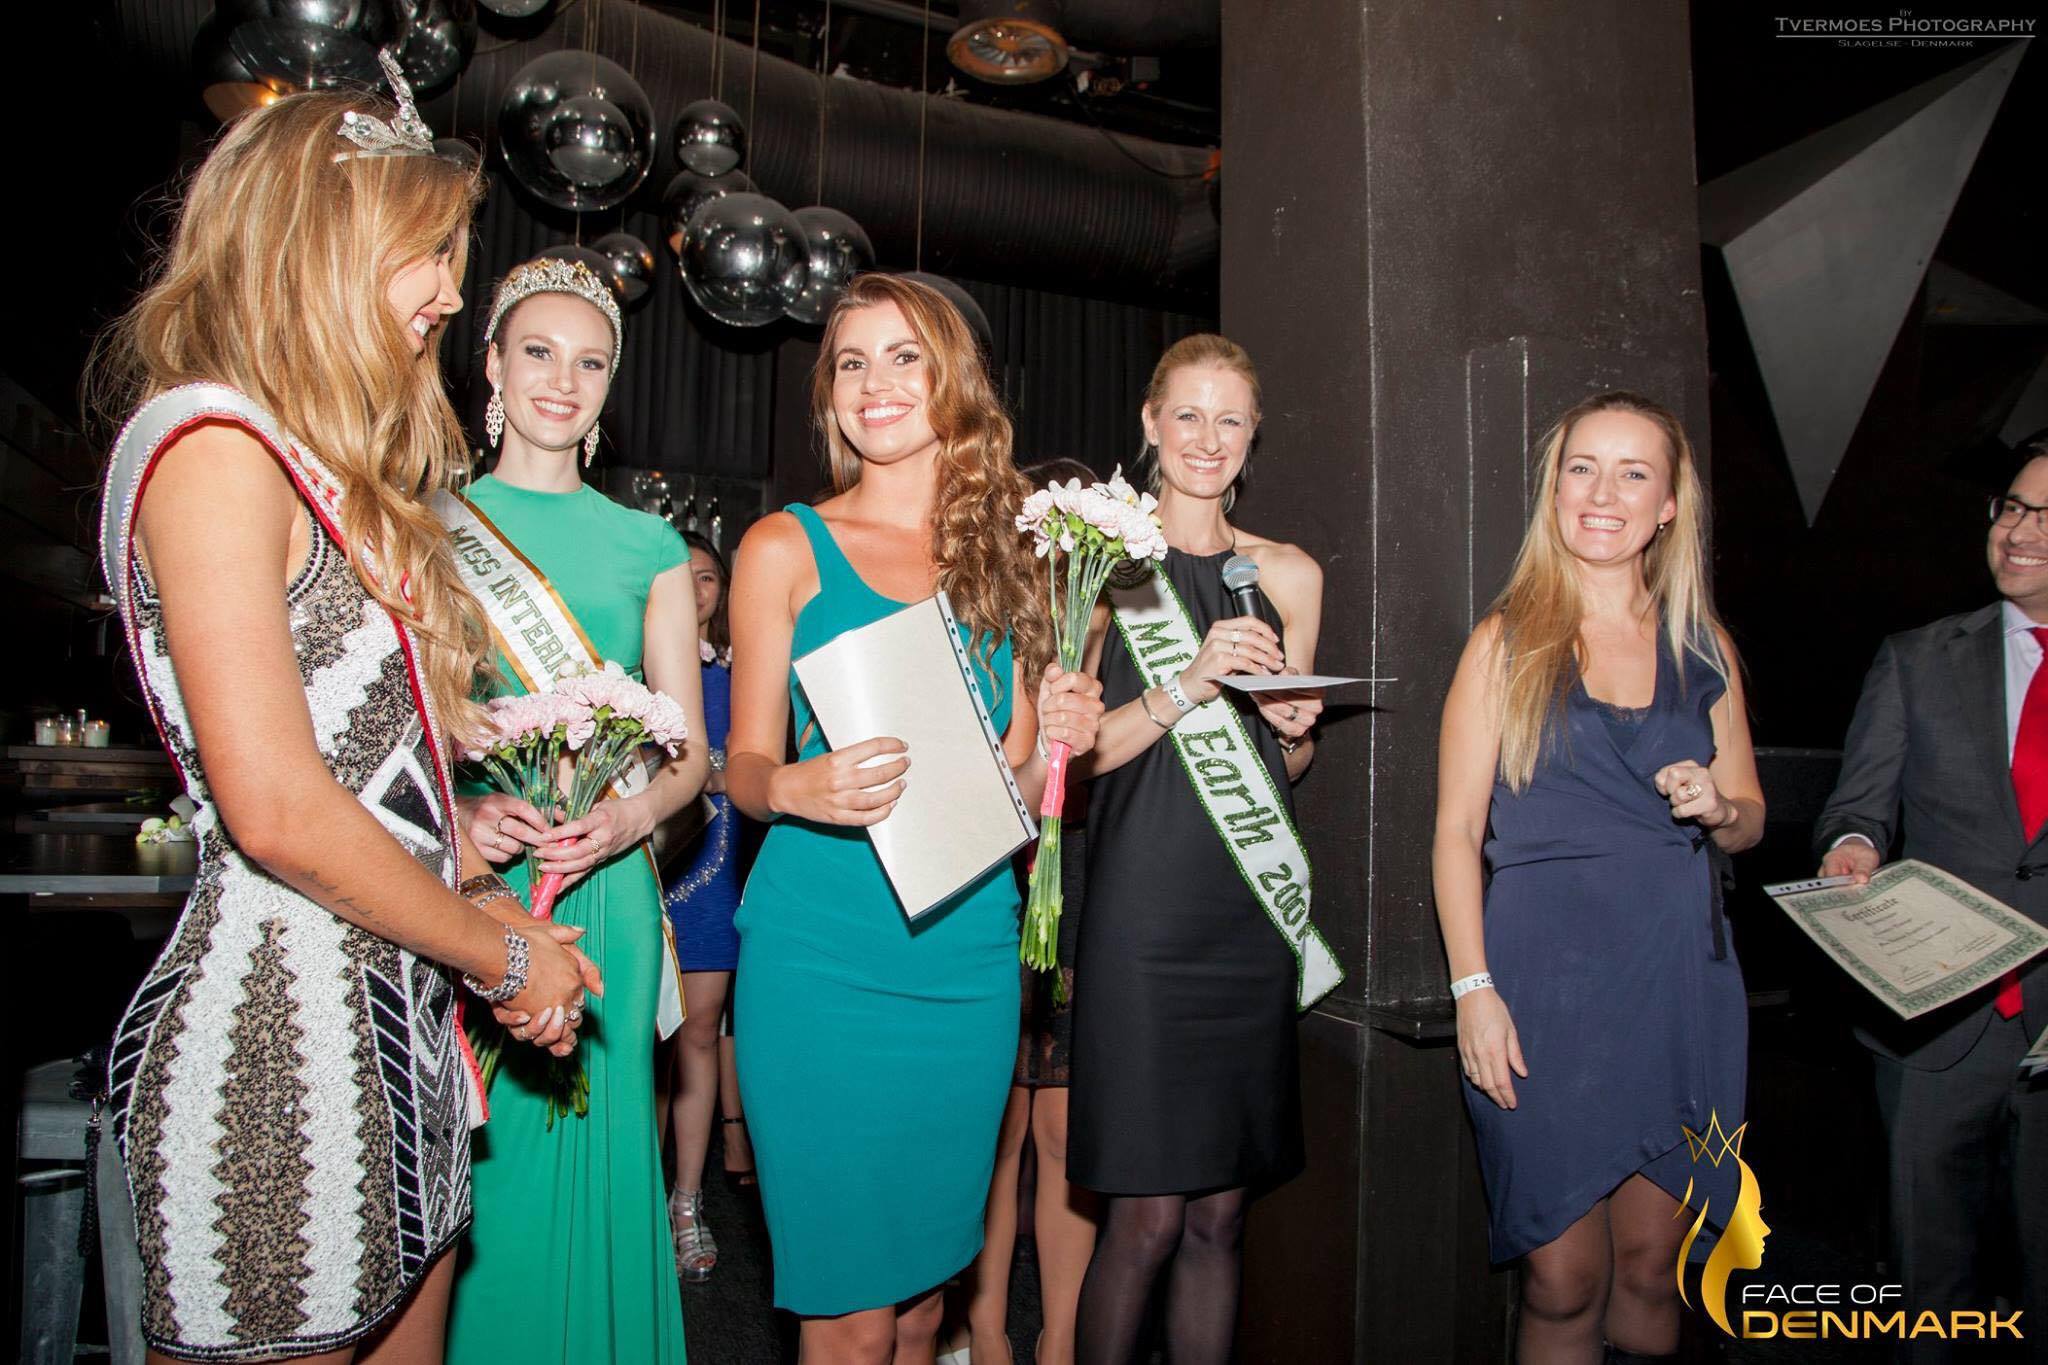 Miss Universe Denmark/Face of Denmark reveals its finalists Missosology